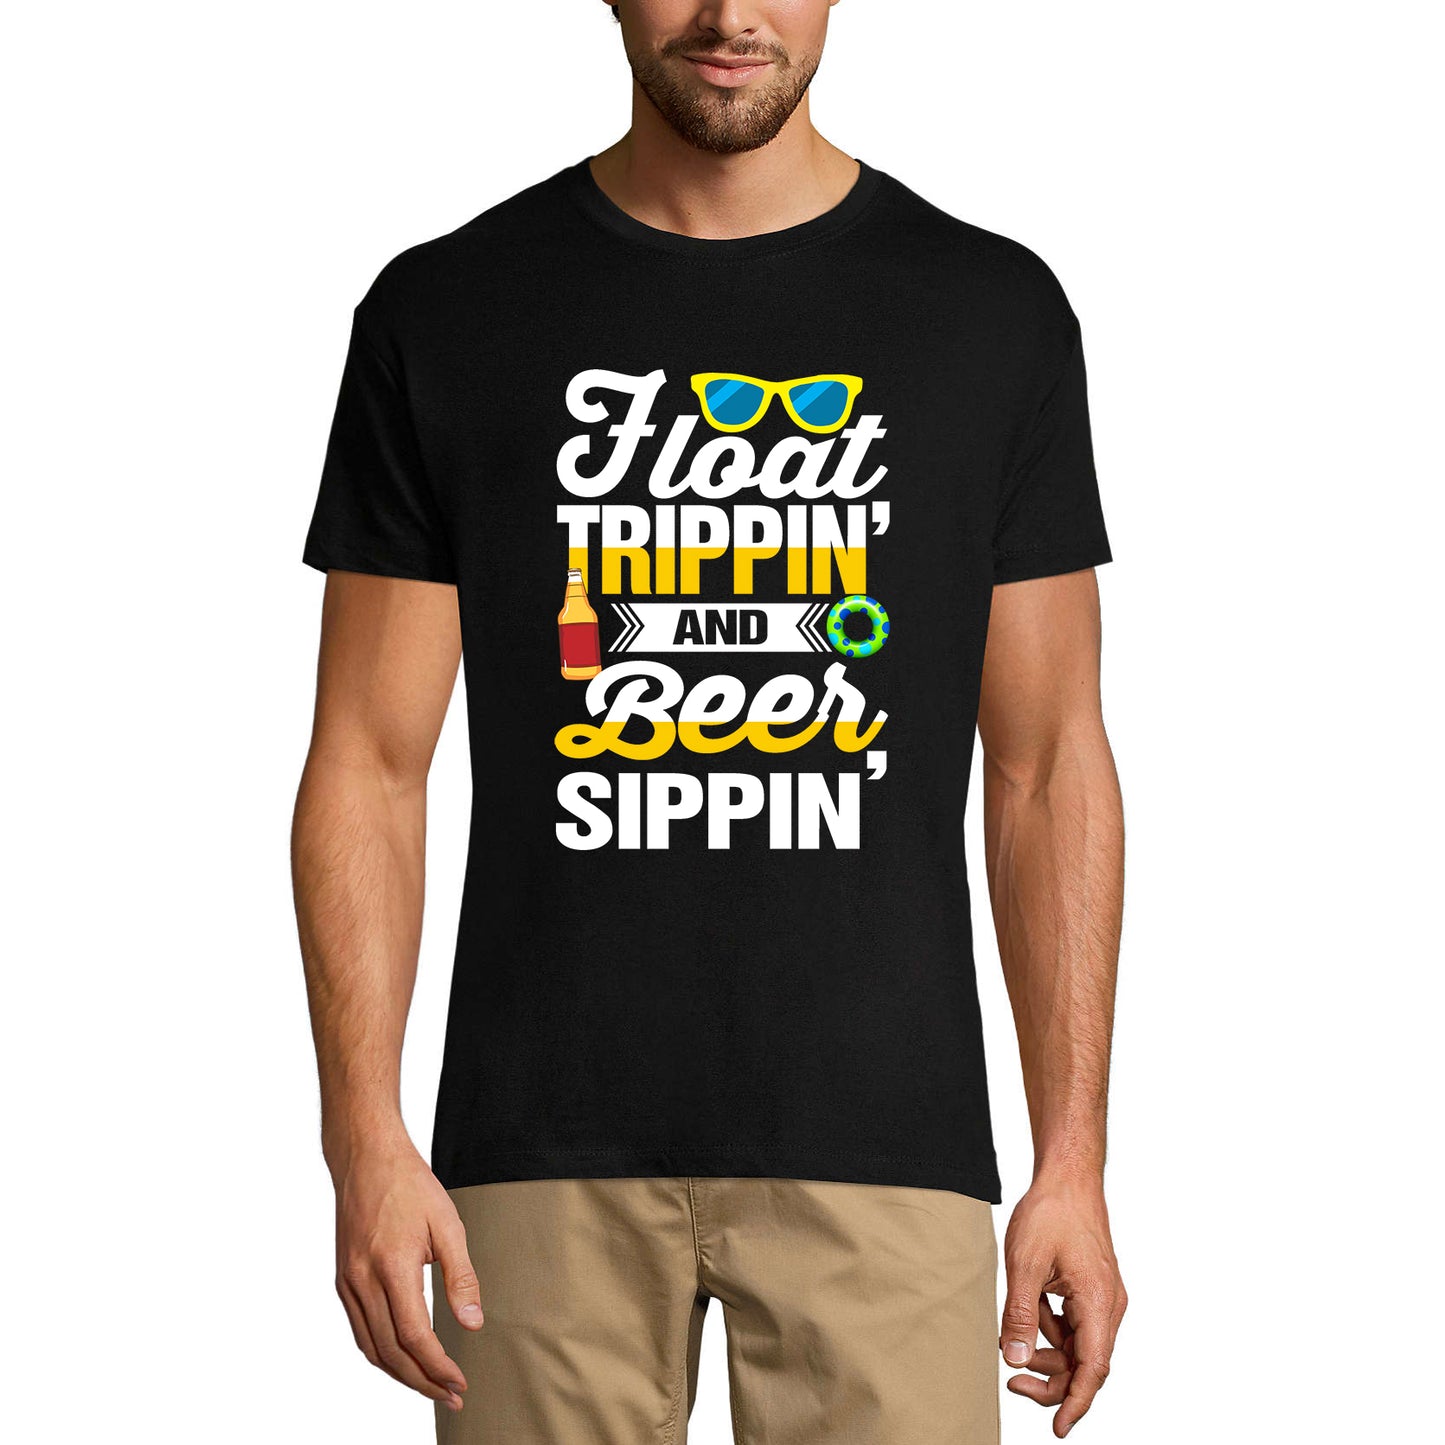 ULTRABASIC Lustiges Herren-T-Shirt Float Trippin' and Beer Sippin' – Bierliebhaber-T-Shirt